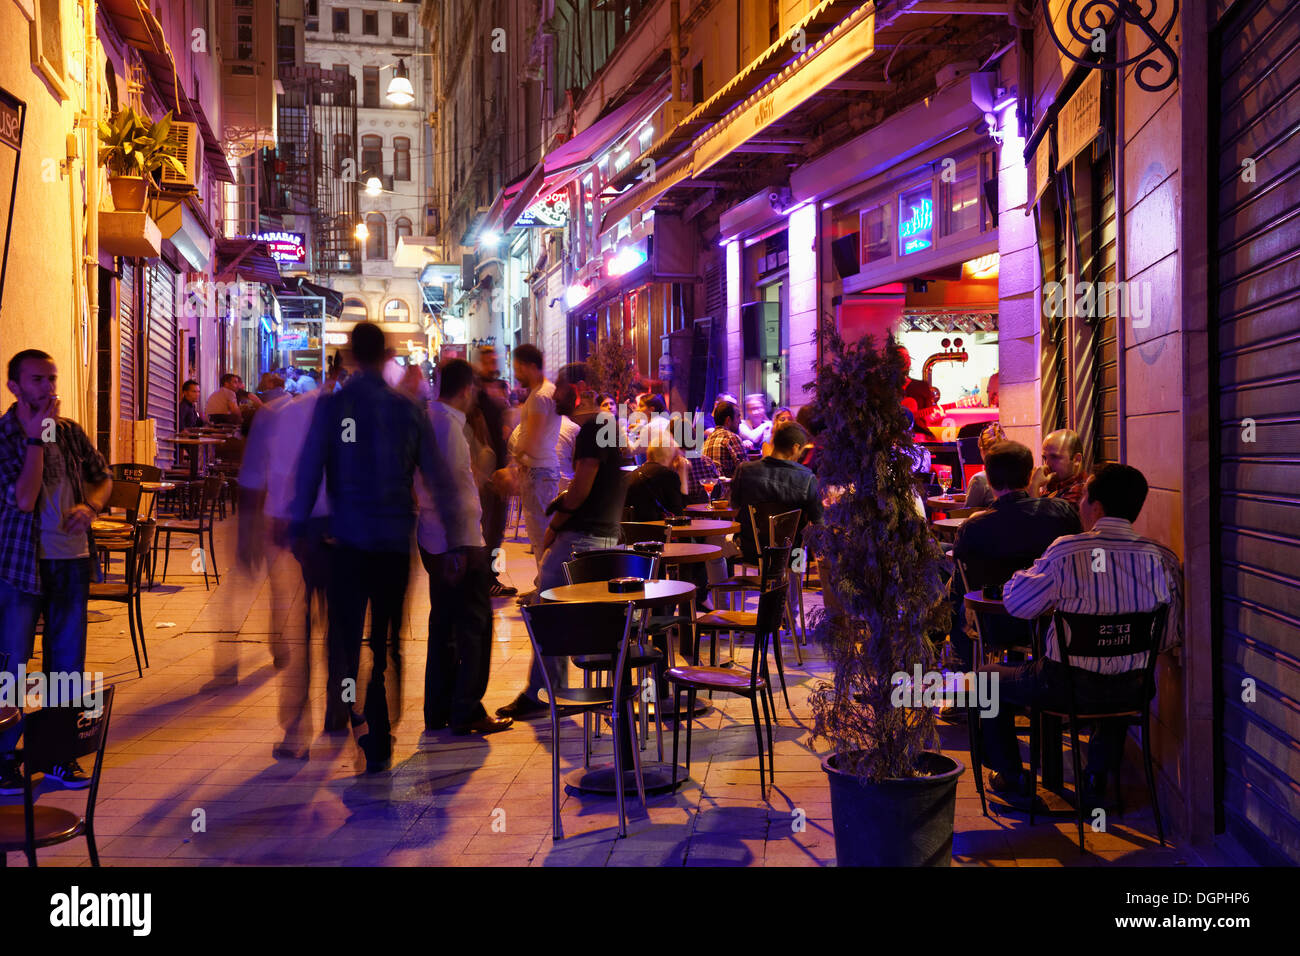 nightlife-in-the-alley-balo-sokak-beyolu-istanbul-european-side-istanbul-DGPHP6.jpg